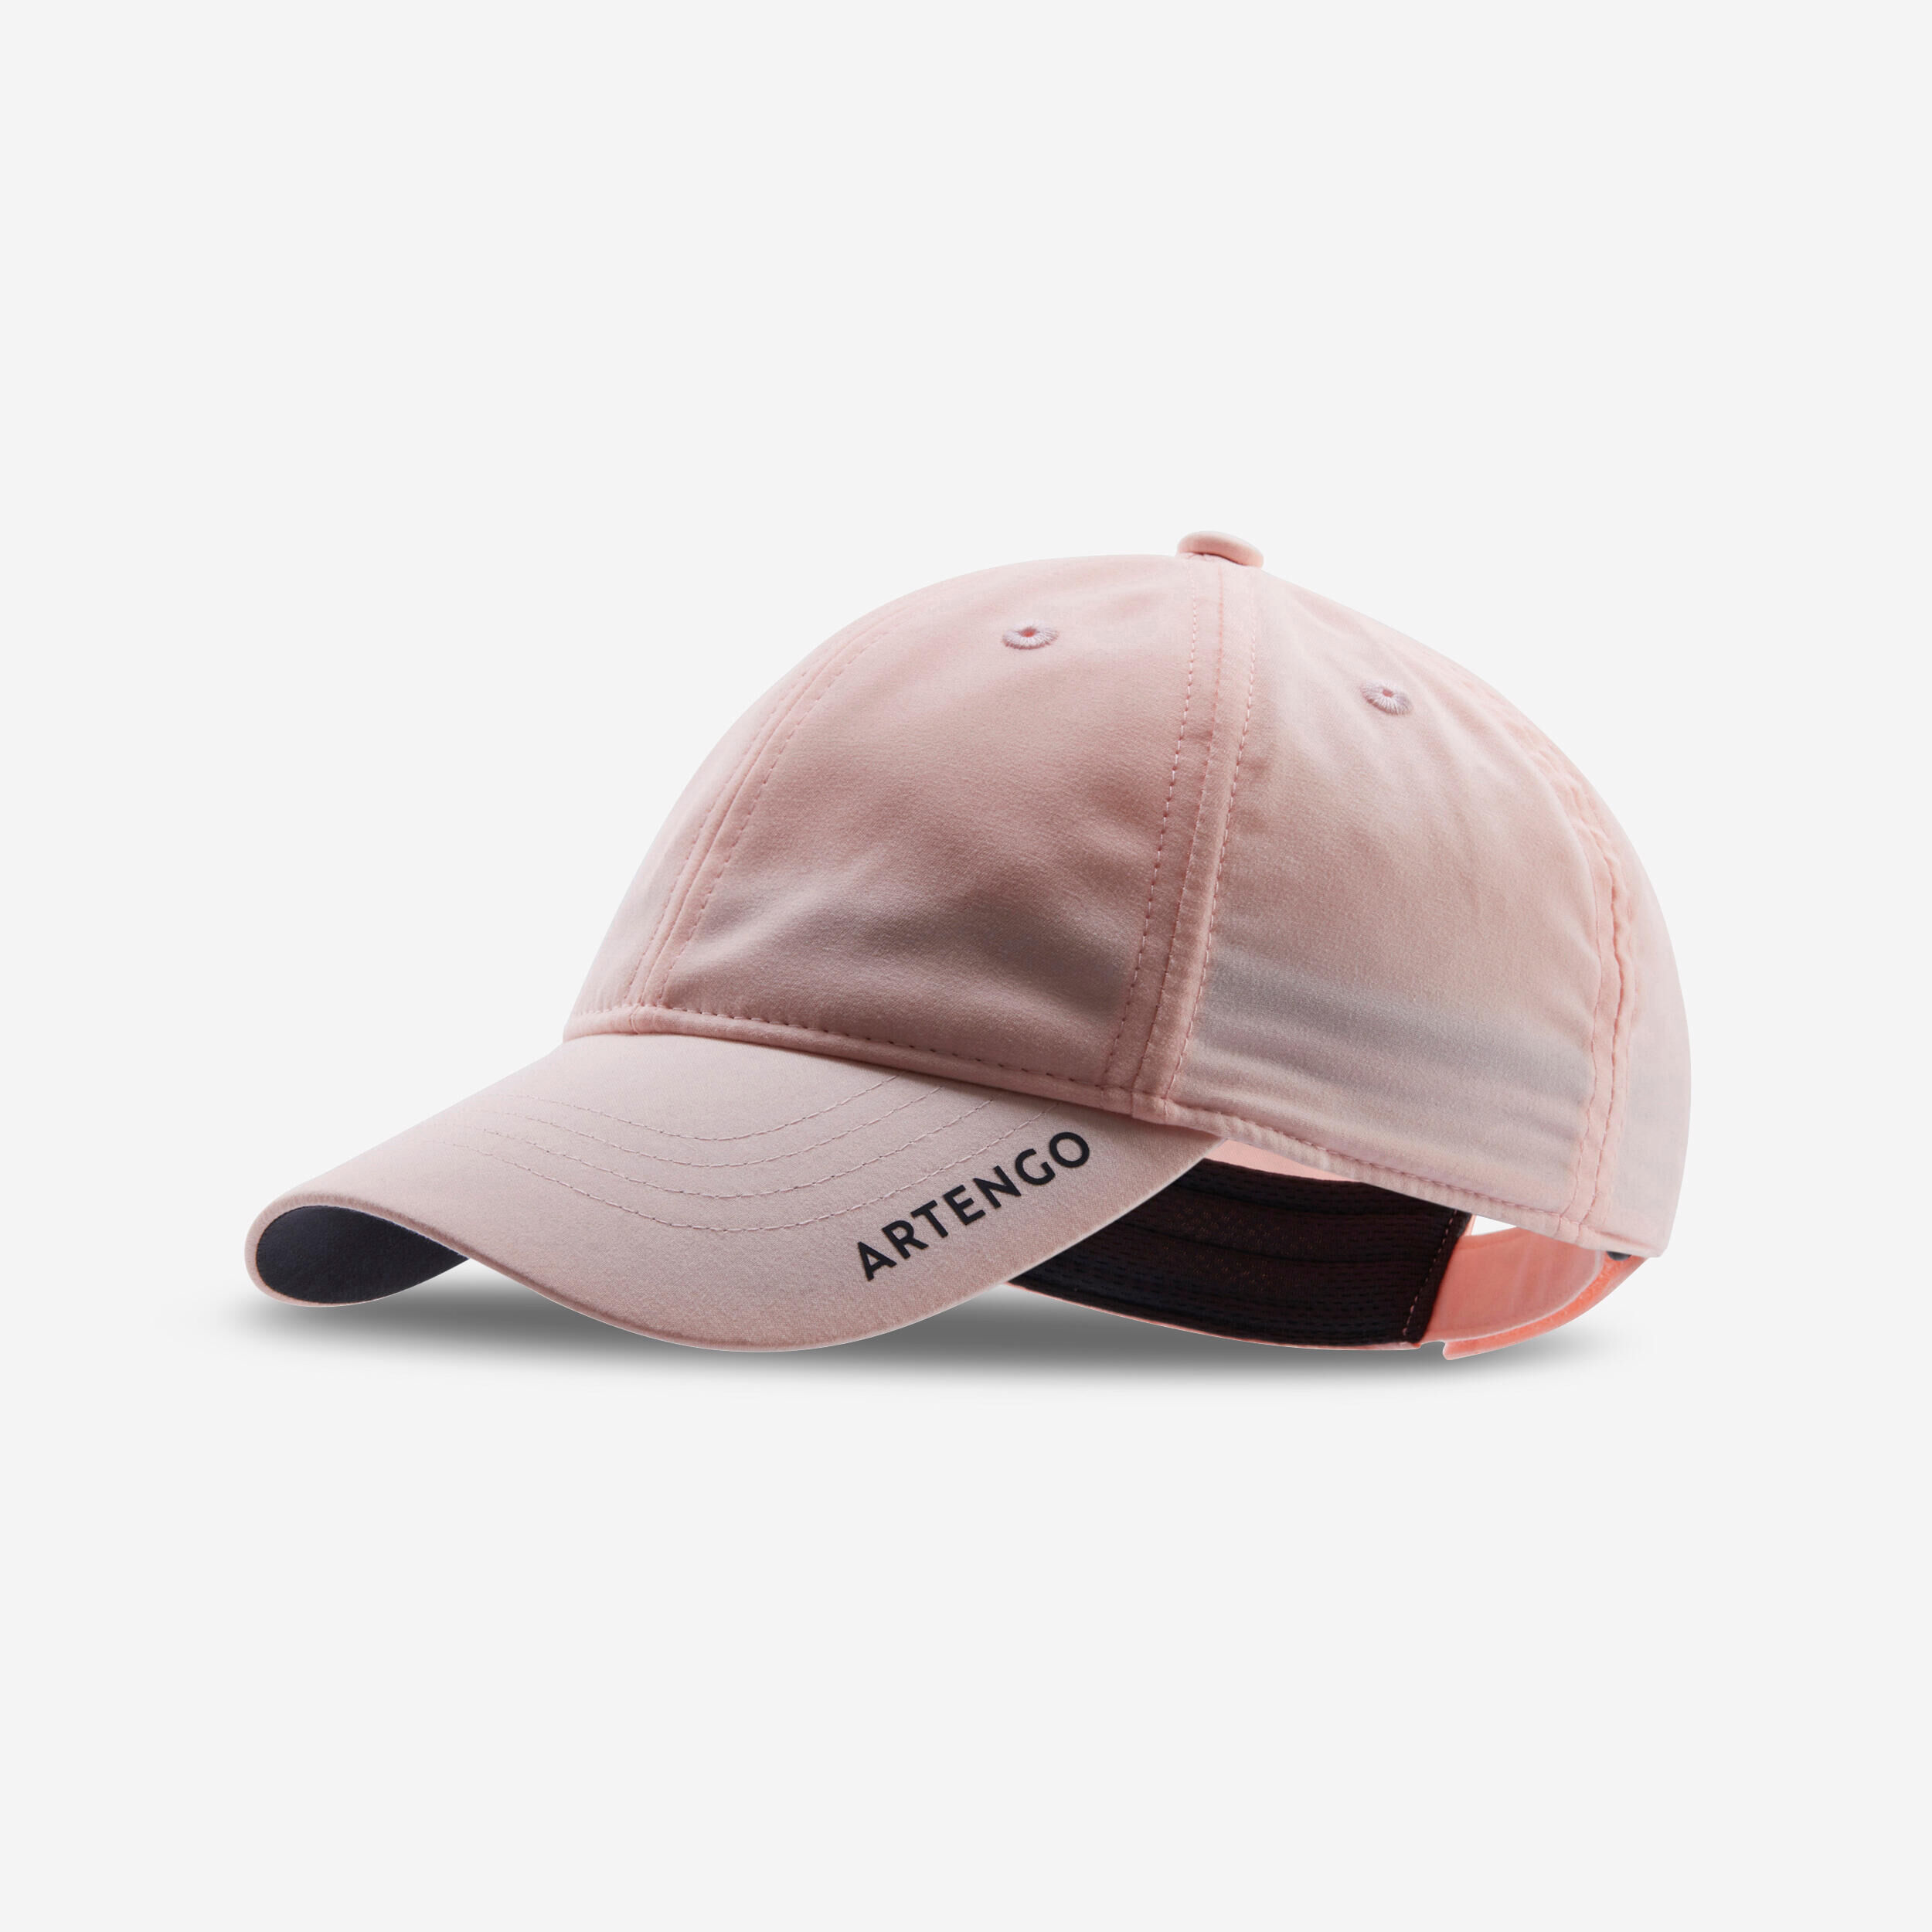 ARTENGO 54 cm Tennis Cap TC 500 - Light Pink / Grey